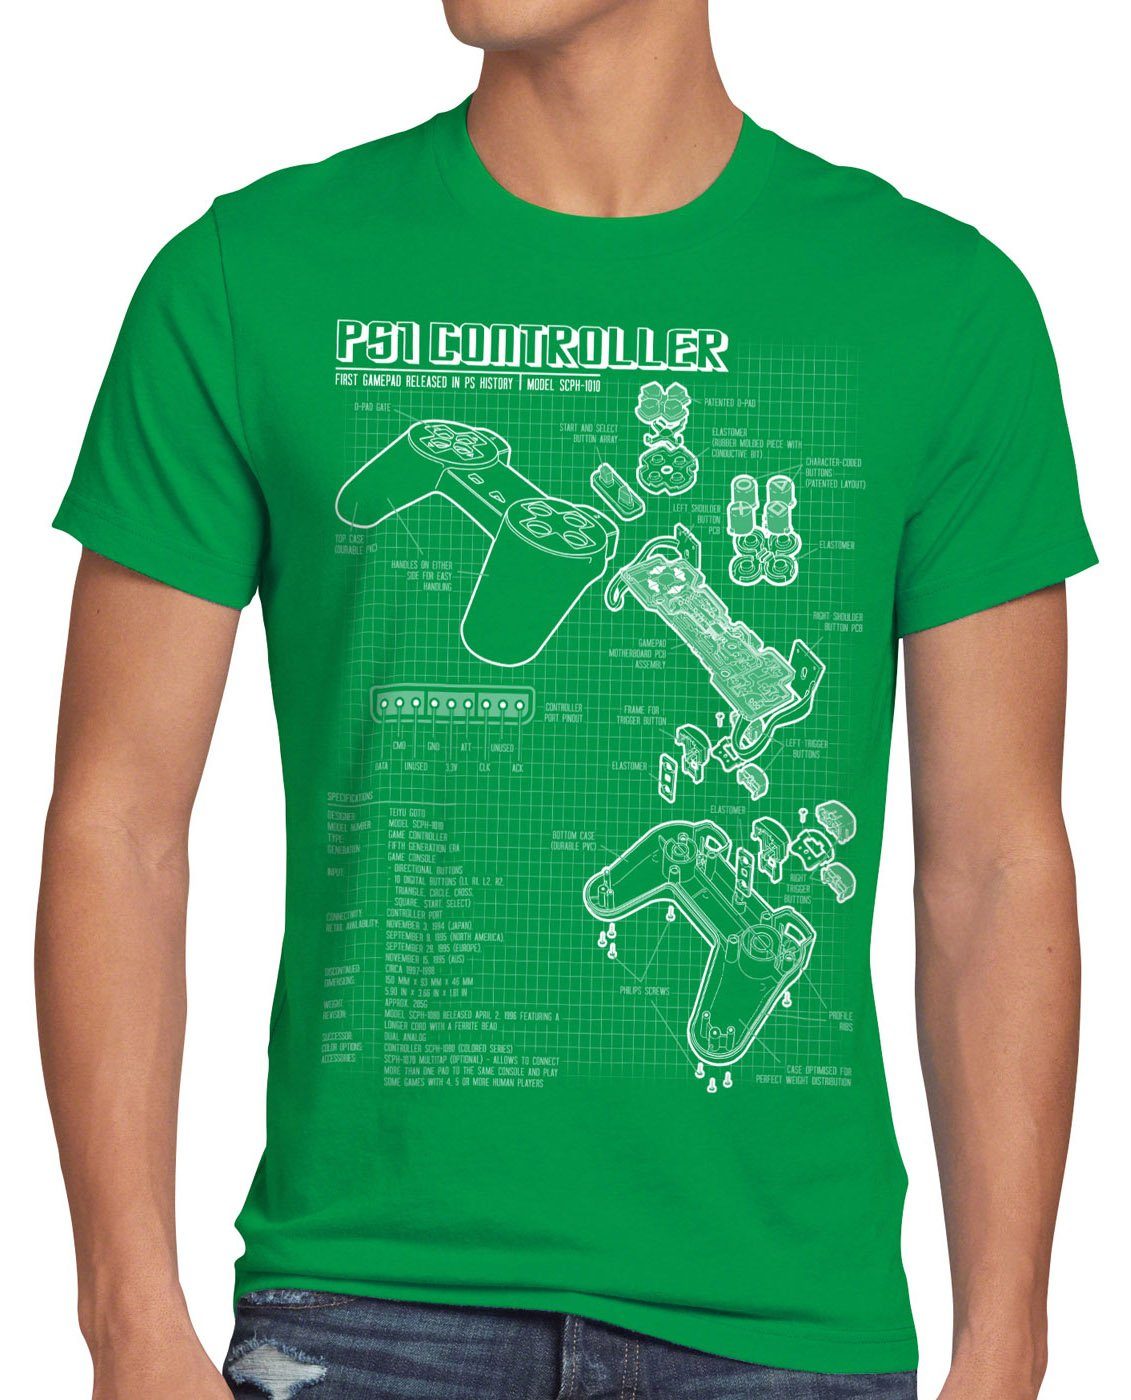 style3 Print-Shirt Herren T-Shirt PS1 Controller Blaupause PS gamepad konsole classic gamer grün